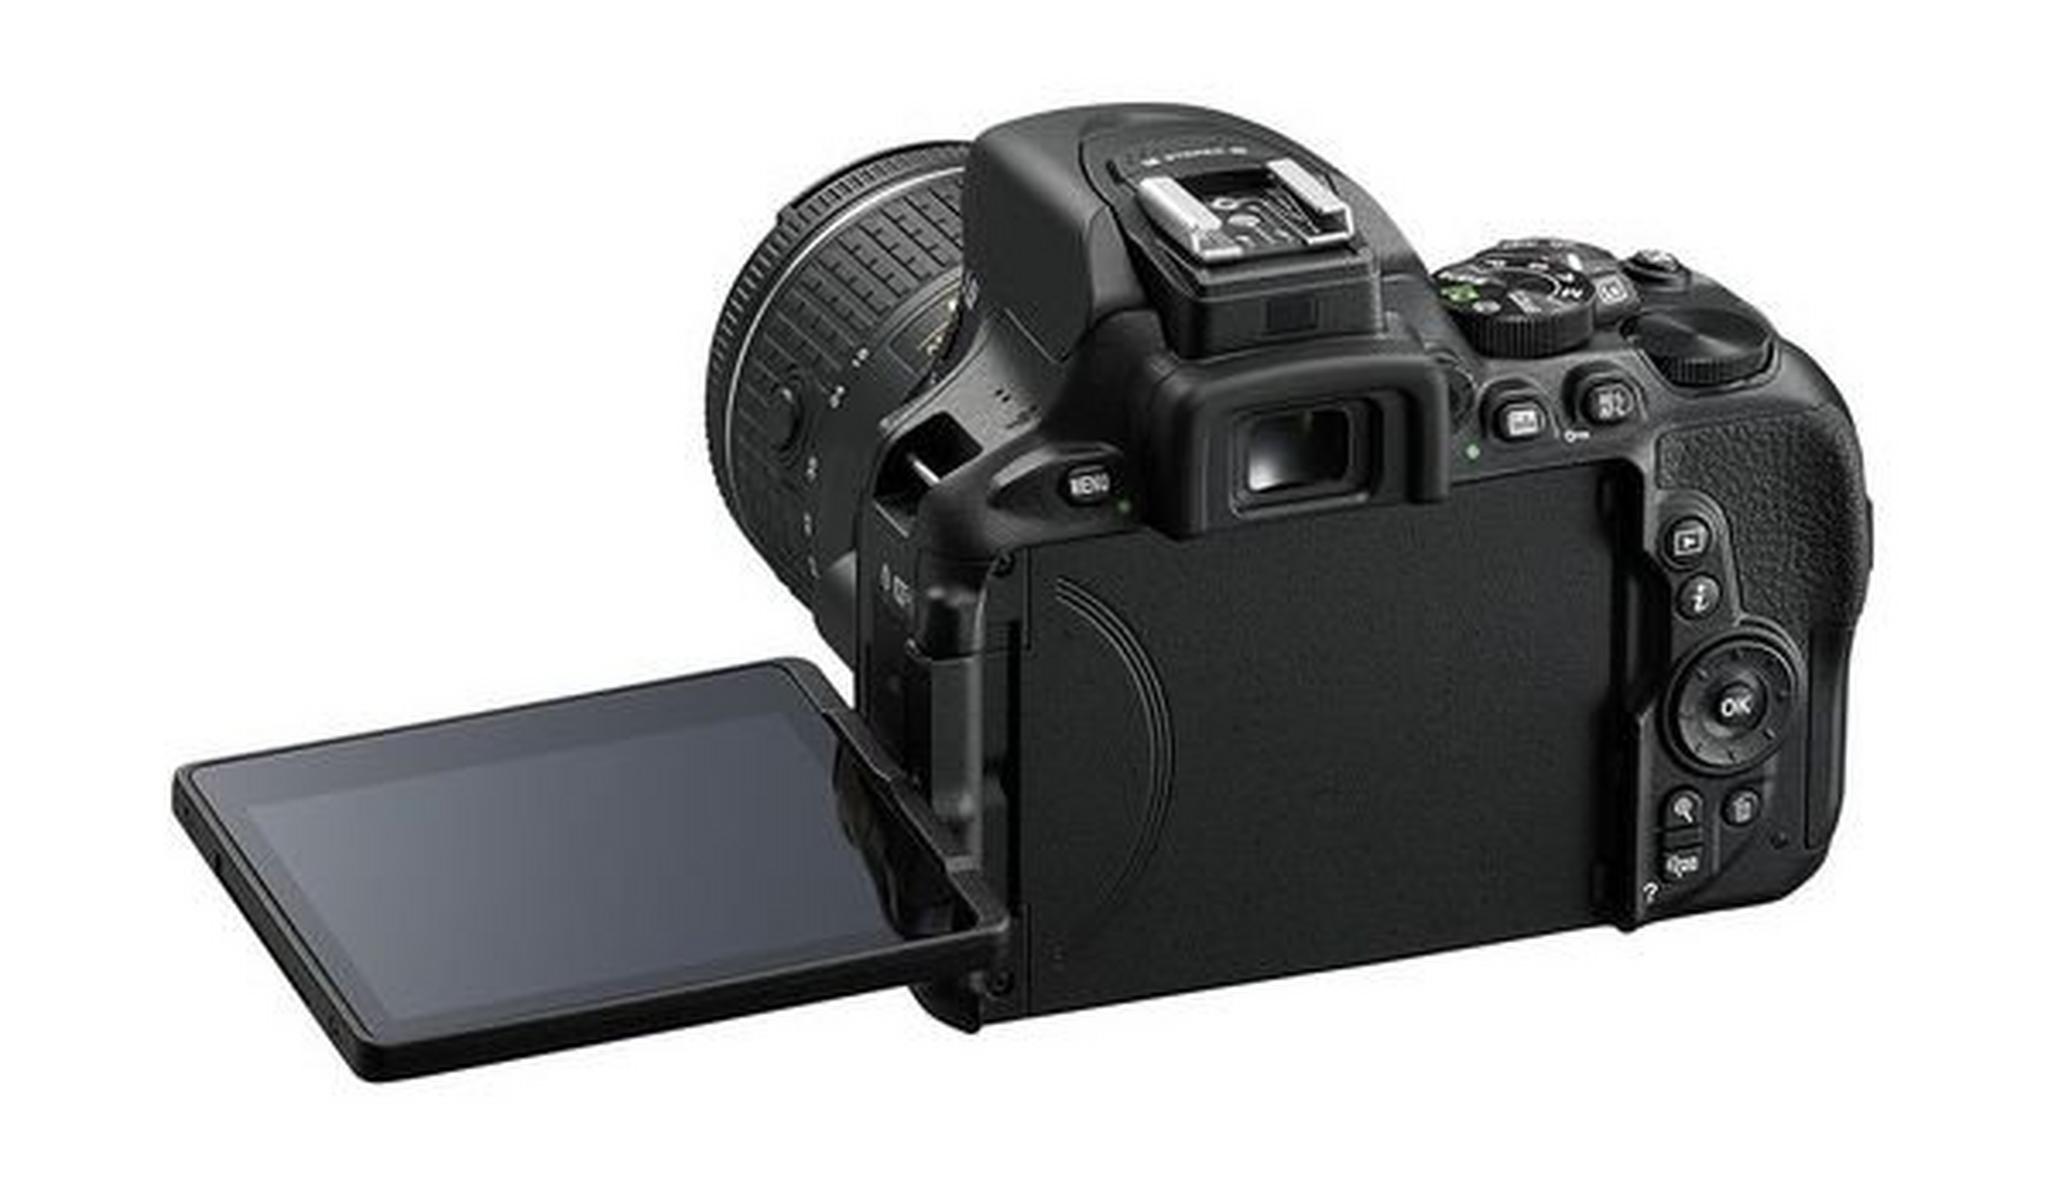 Nikon D5600 DSLR Camera 24.2MP Wifi With DX 18-55mm f/3.5-5.6G VR Lens - Black